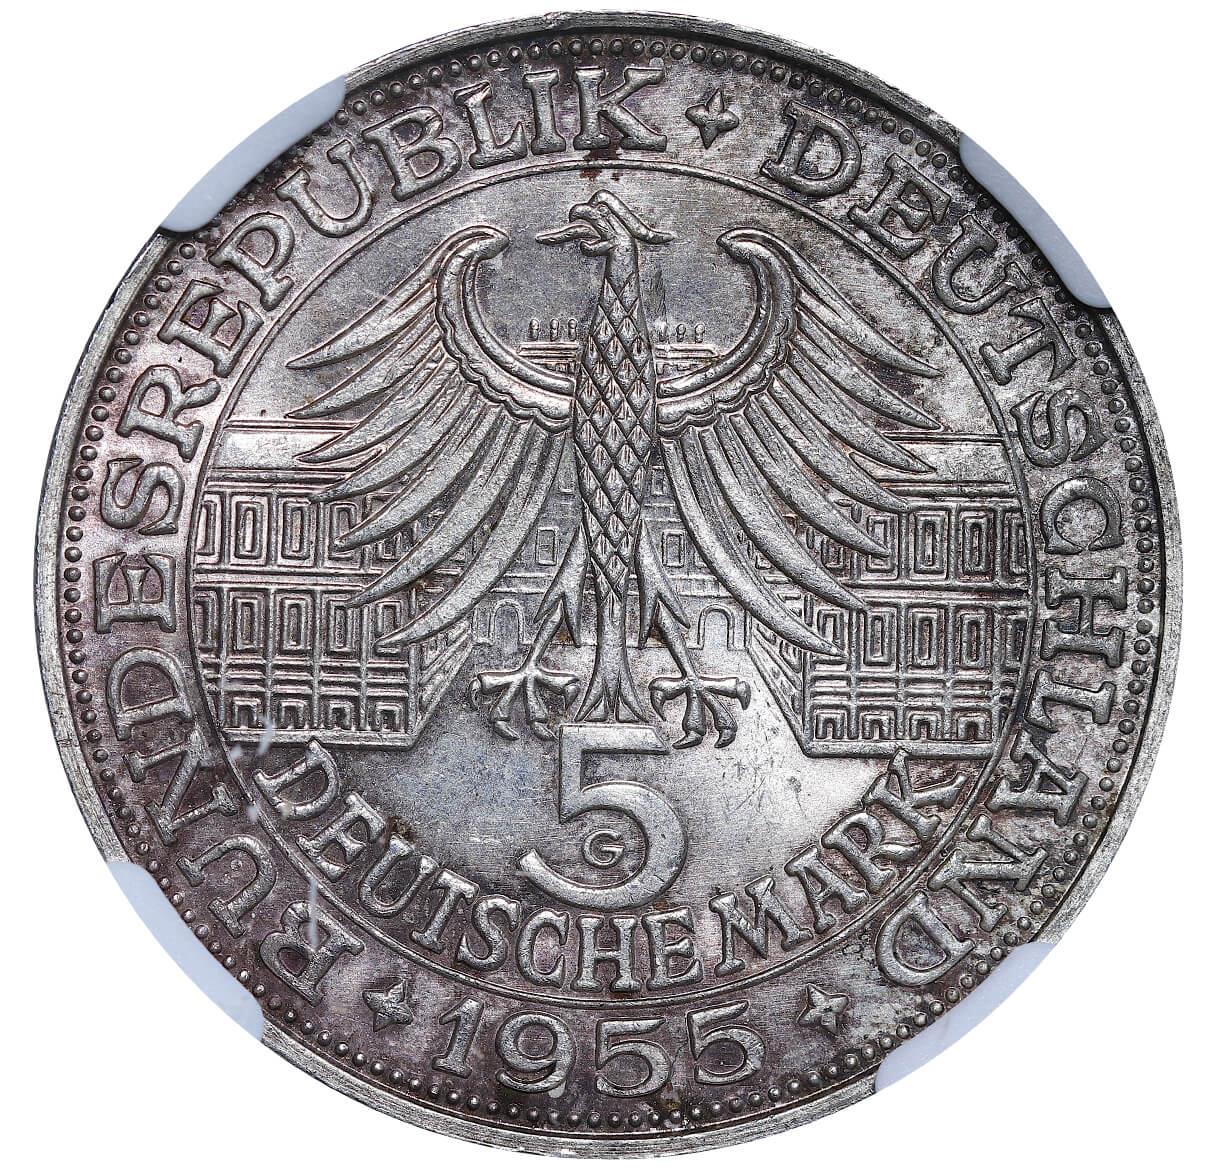 Federal Republic of Germany, 5 Deutsche Mark, G, 300th Anniversary - Birth of Ludwig Wilhelm Markgra - Image 3 of 3